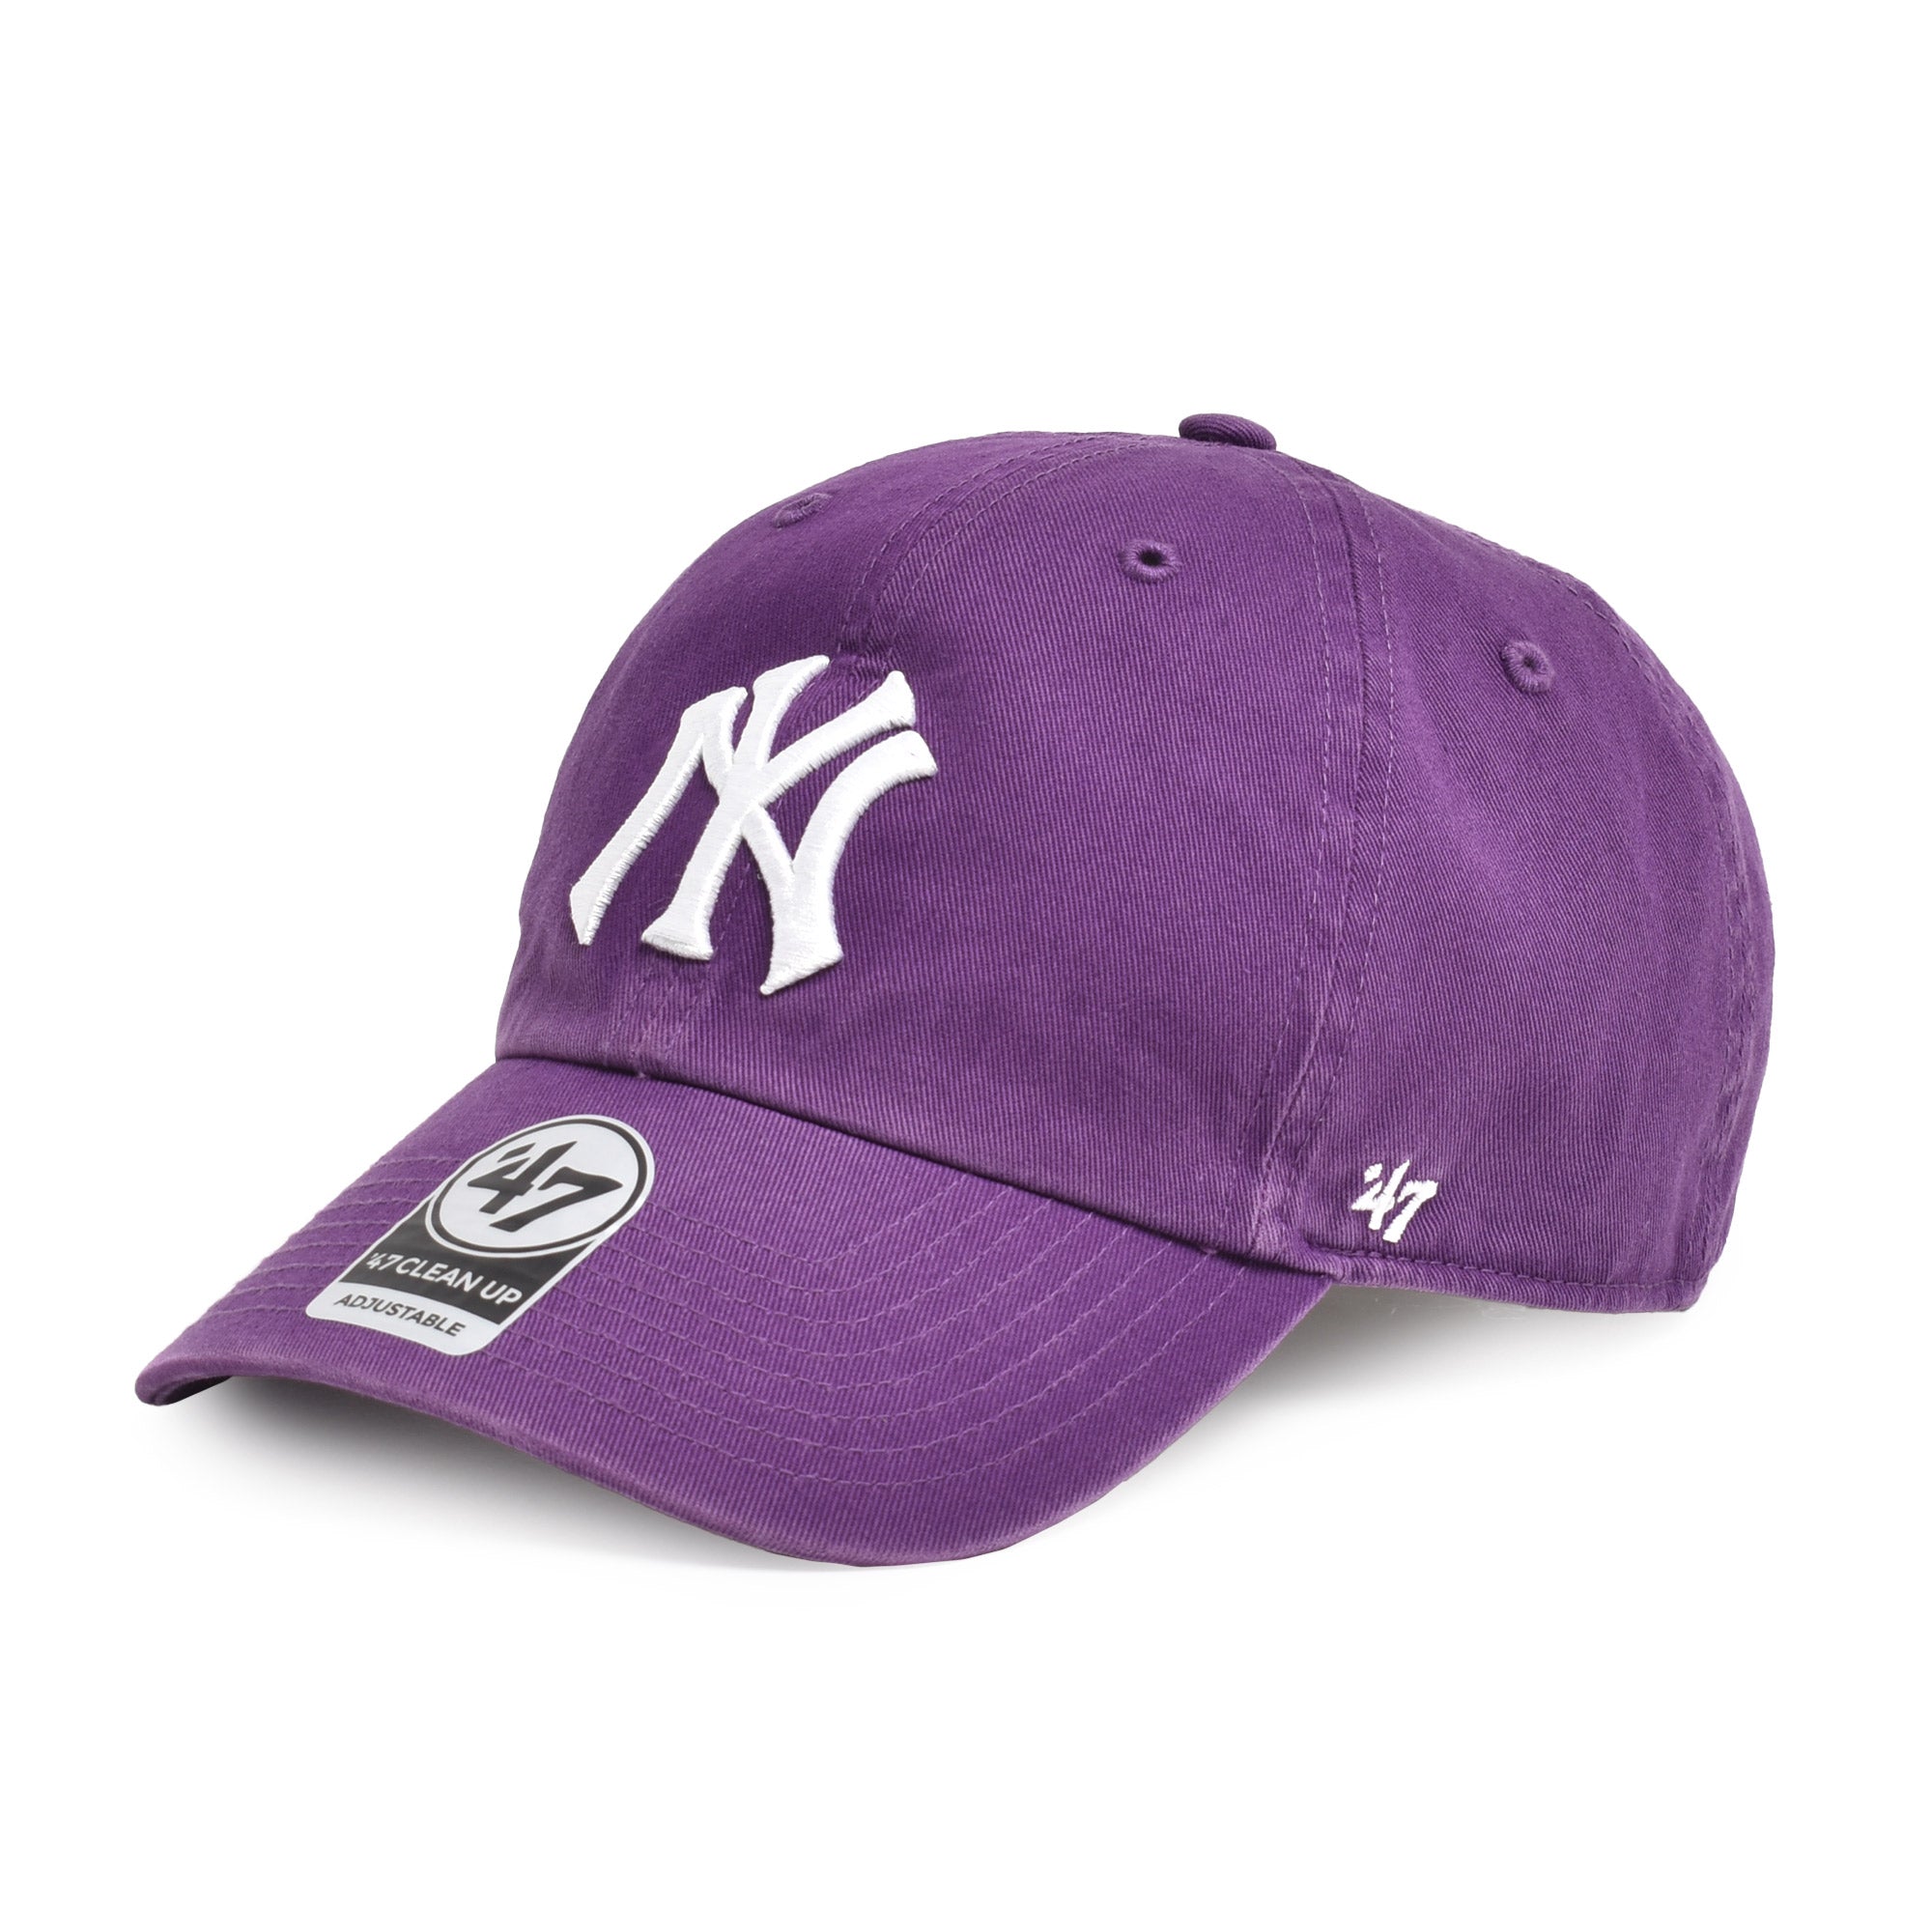 NY YANKEES CLEANUP B-NLRGW17GWS 帽子 2カラー 返品無料 当日出荷